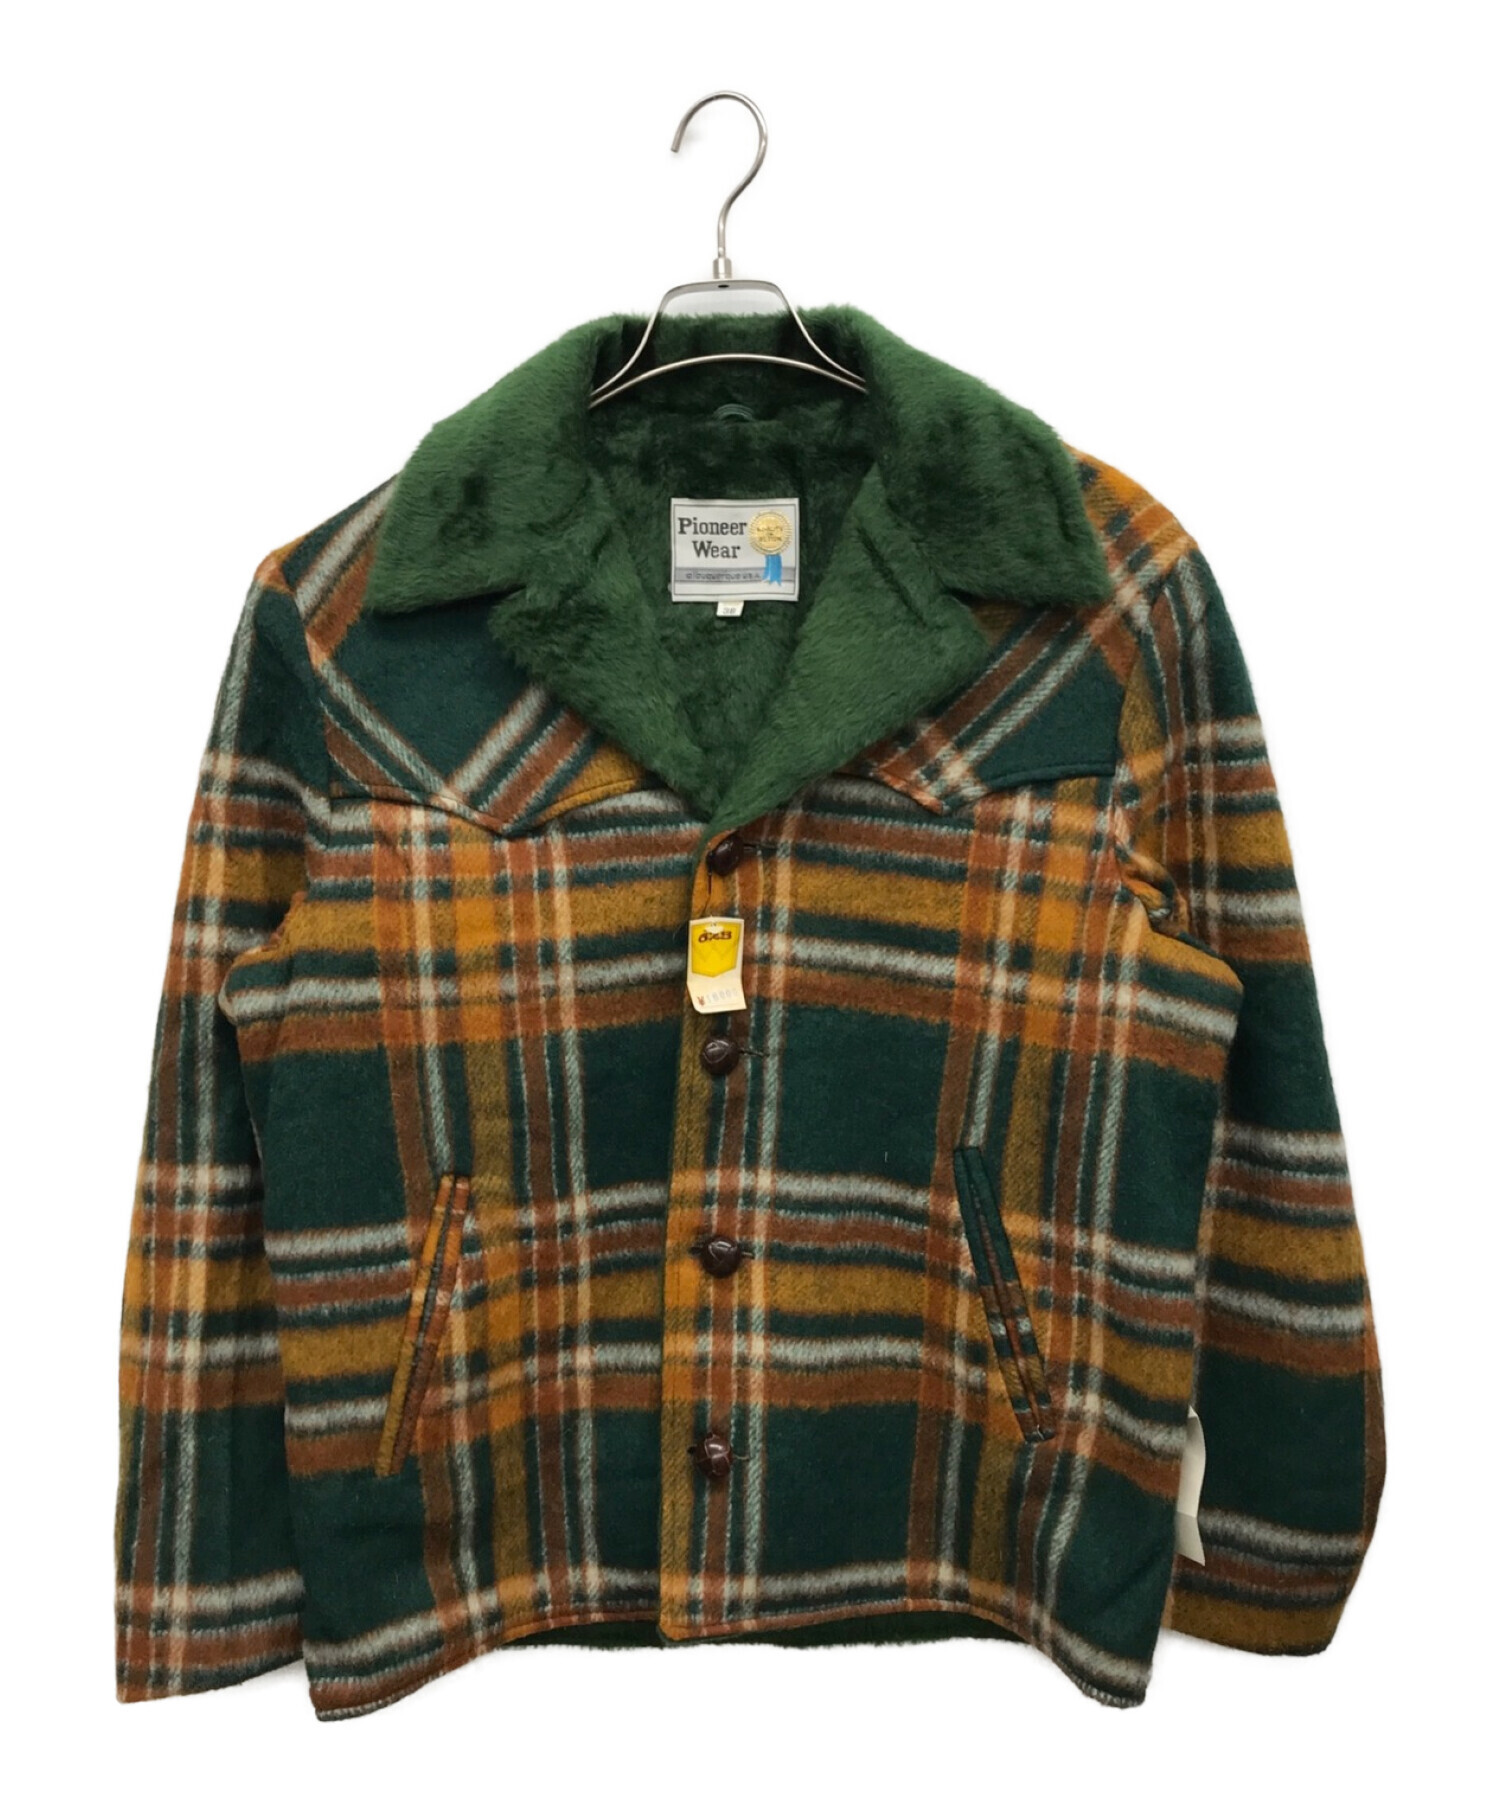 PIONEER WEAR (パイオニアウェア) ウールジャケット グリーン サイズ:38